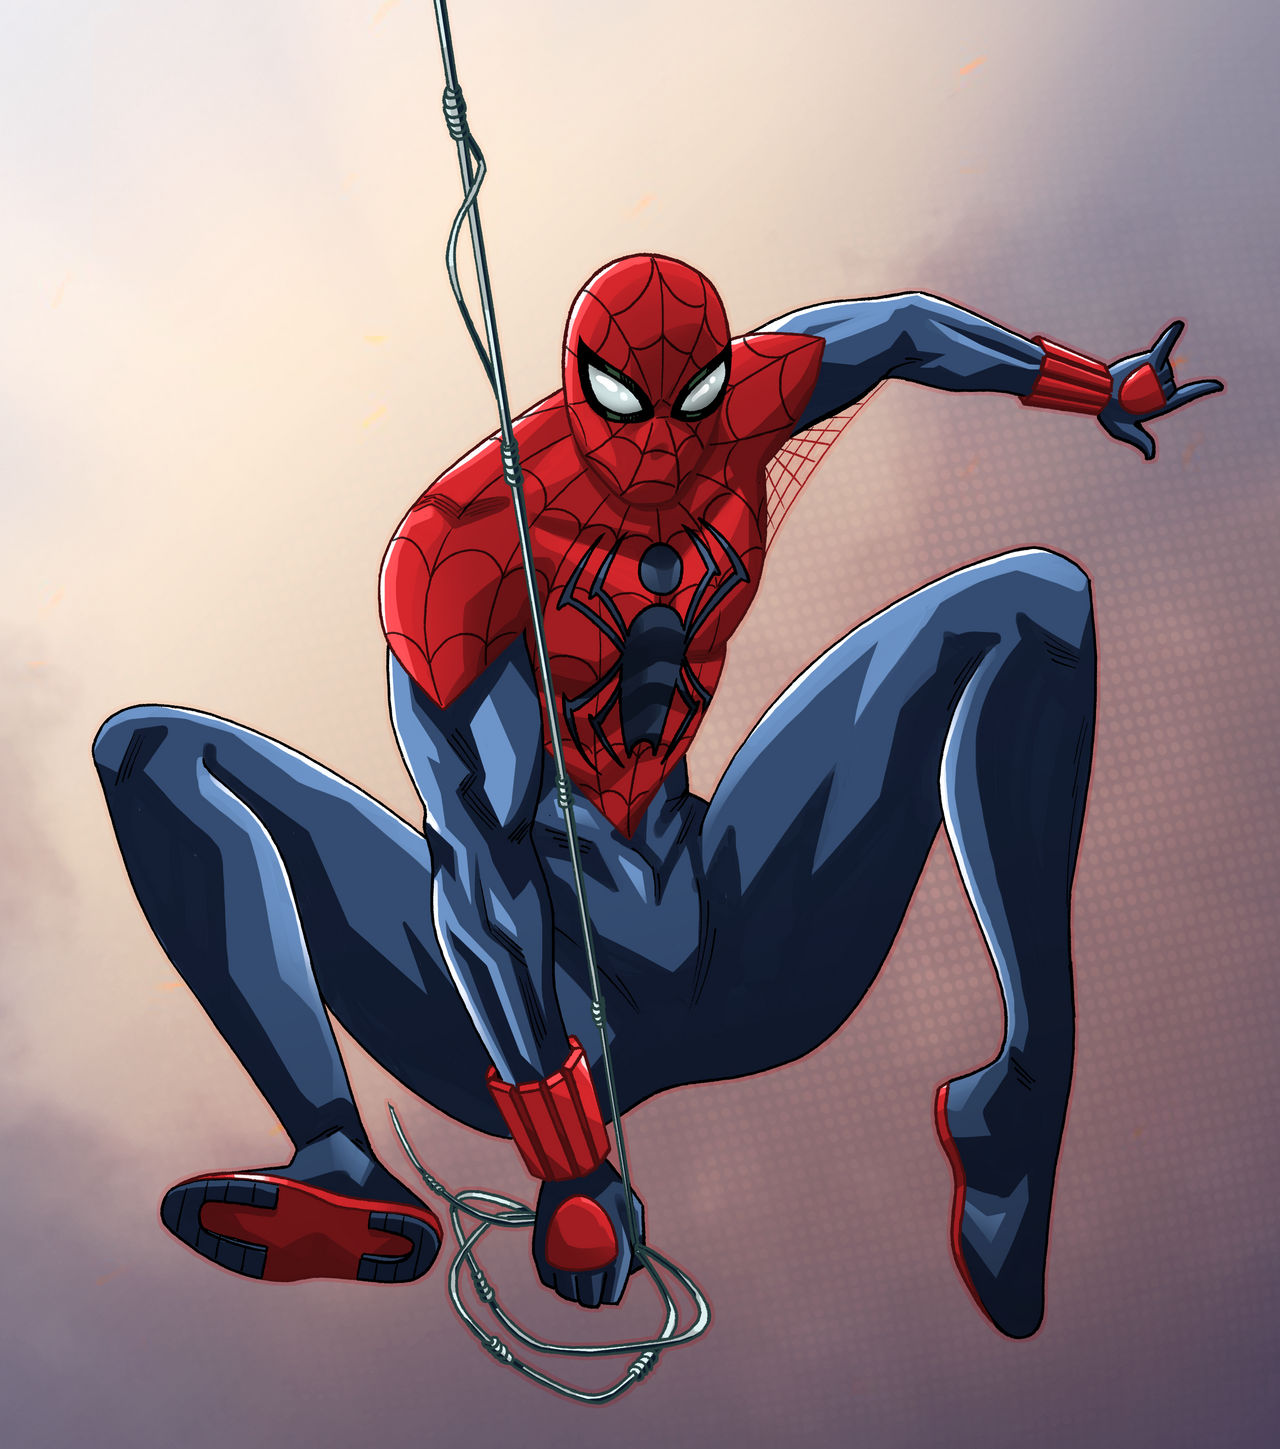 Spider-Man - Alex Ross design - Recolor by NikoAlecsovich on DeviantArt